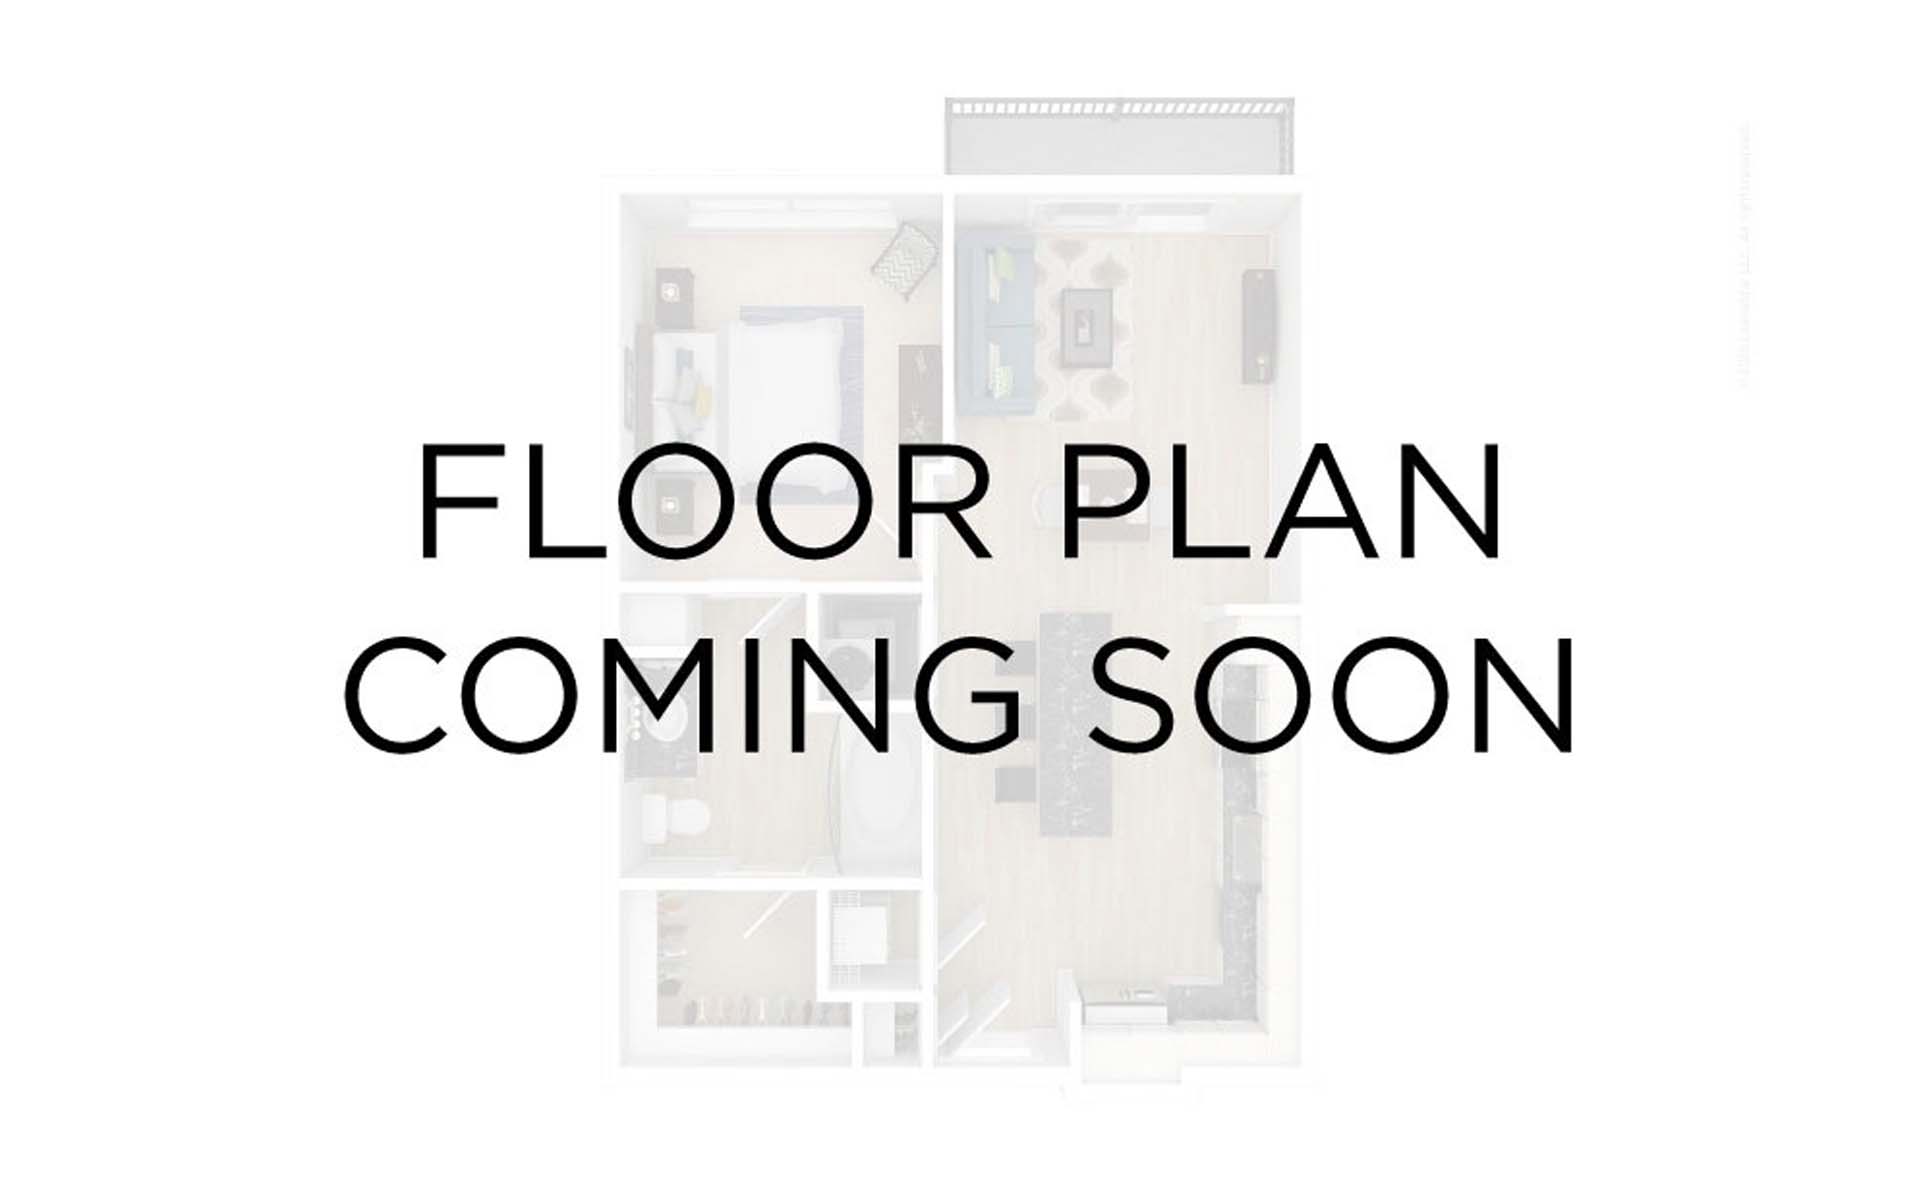 "Floor Plan Coming Soon" Over A Rendered Plan